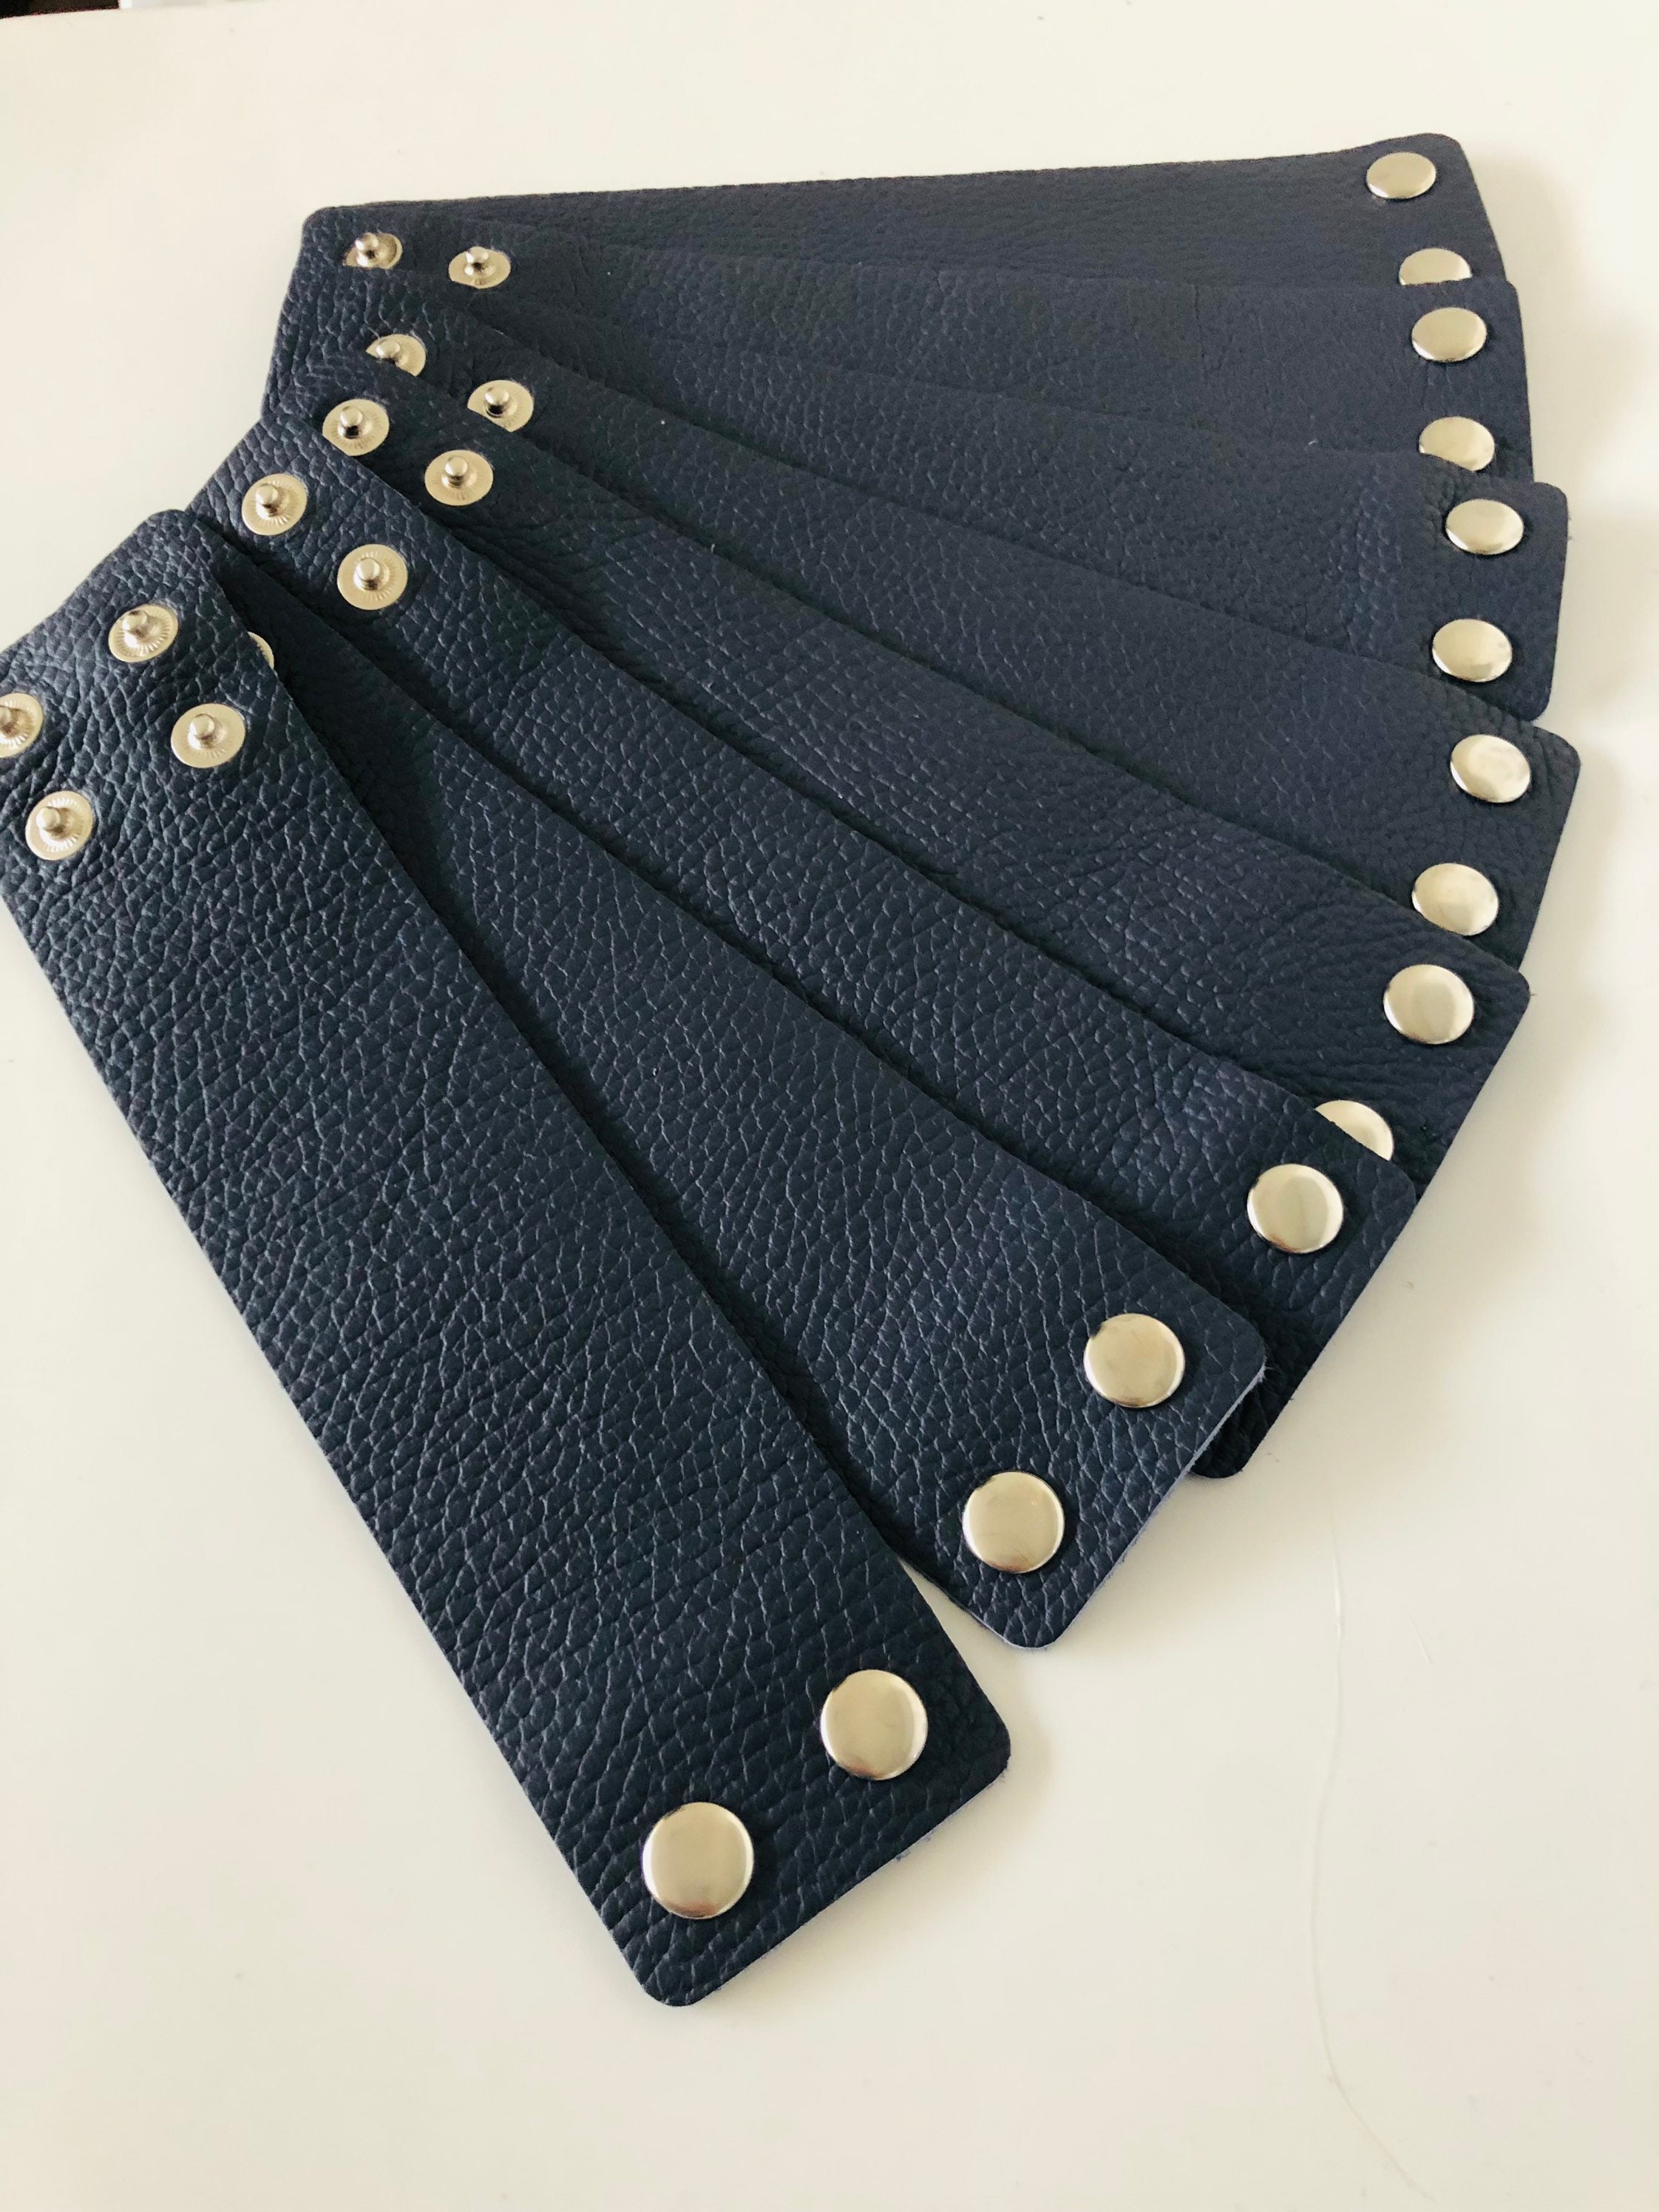 Wholesale Bulk 100Pcs/Lots Genuine Leather Cuff Bracelets For Men Women